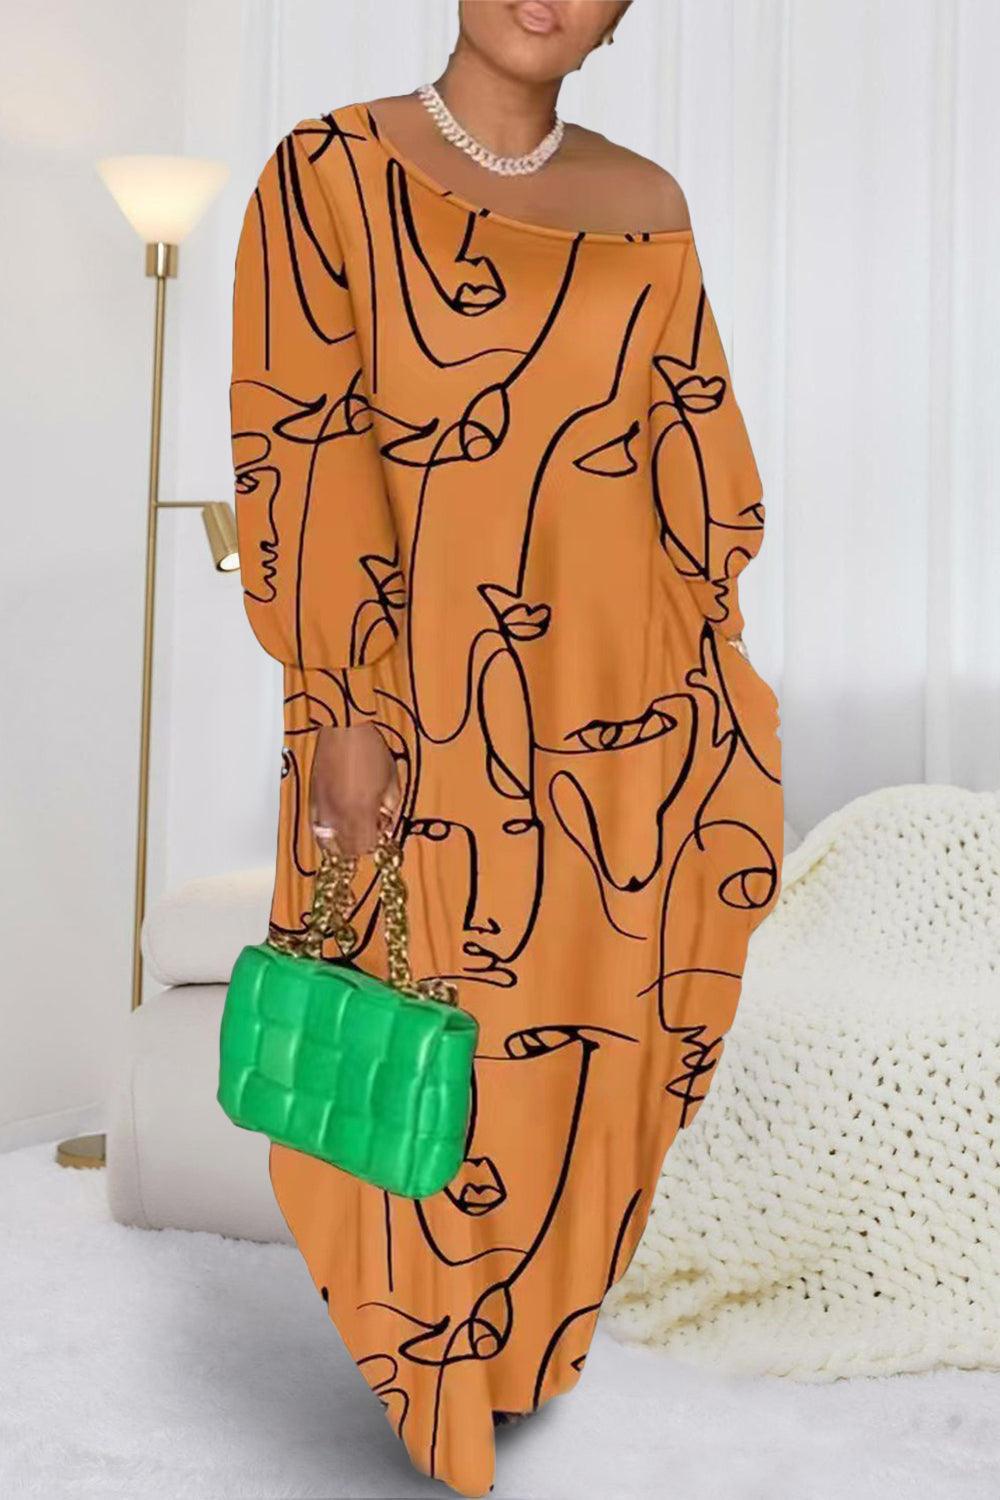 a woman in an orange dress holding a green purse